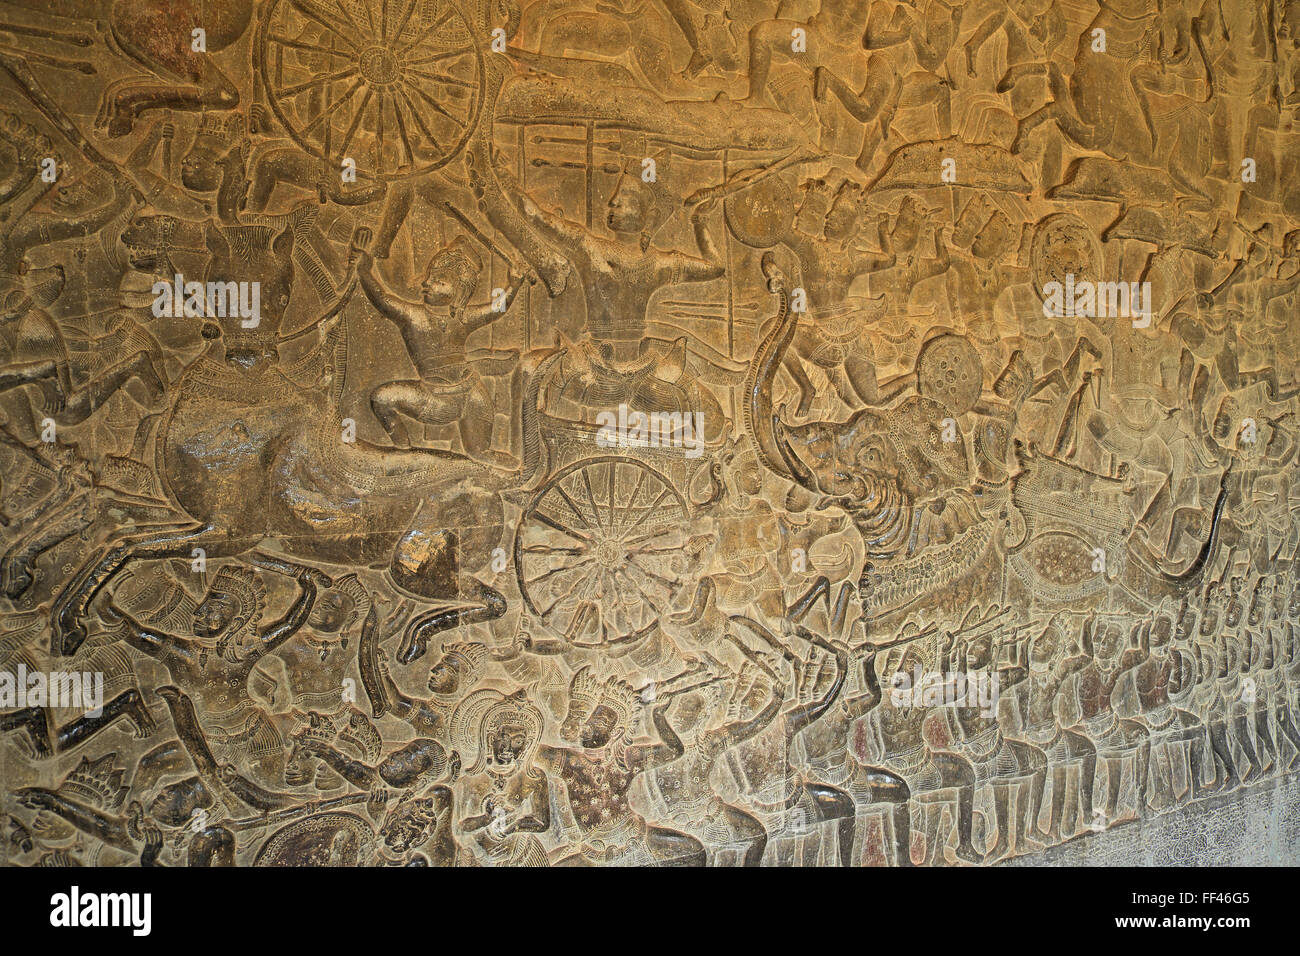 Battle of Kuruksheta (from the Hindu epic Mahabharata), western gallery, Angkor Wat, near Siem Reap, Cambodia, Asia. Stock Photo